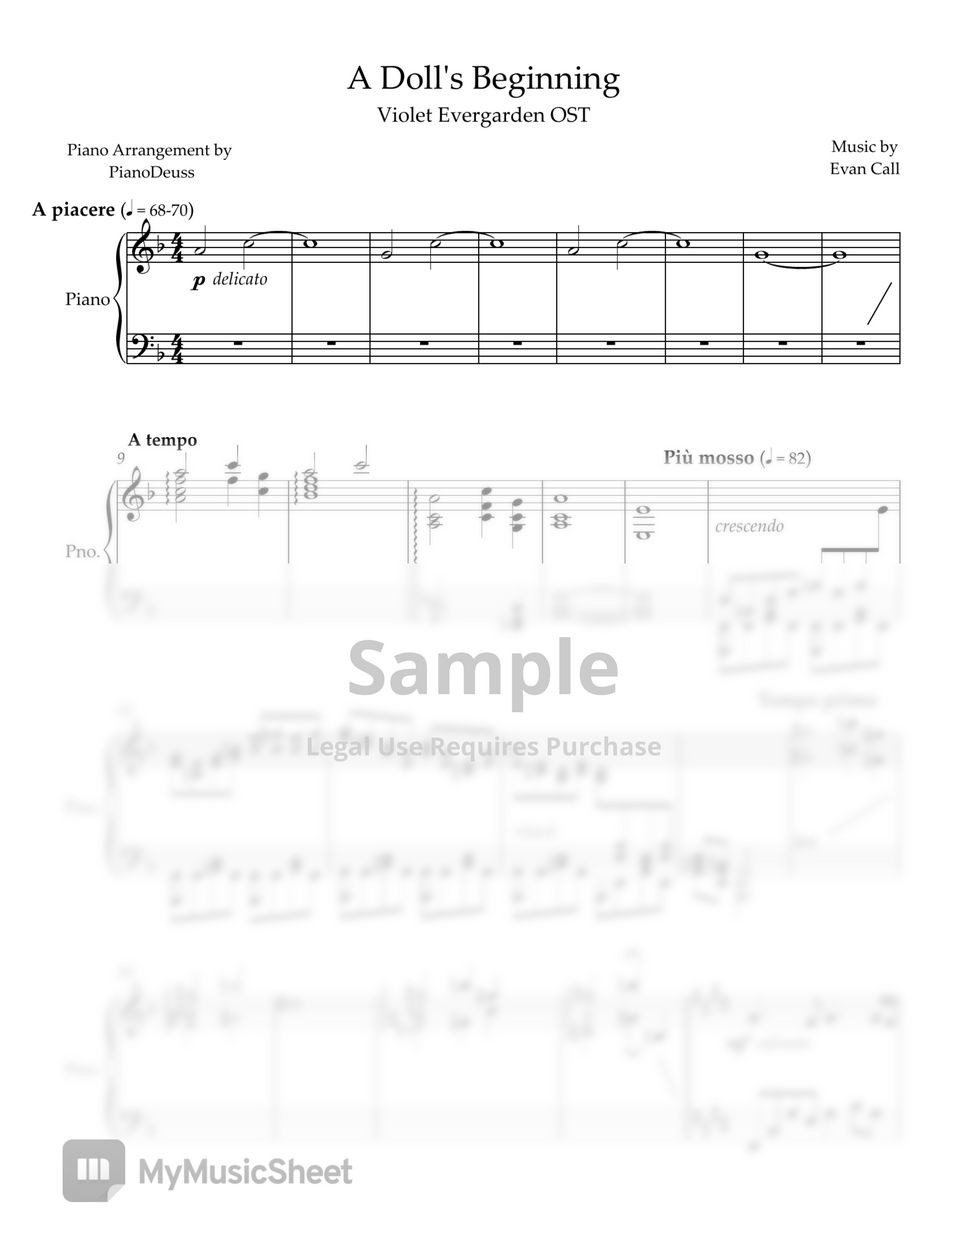 Violet Evergarden OST - A Doll's Beginning by PianoDeuss